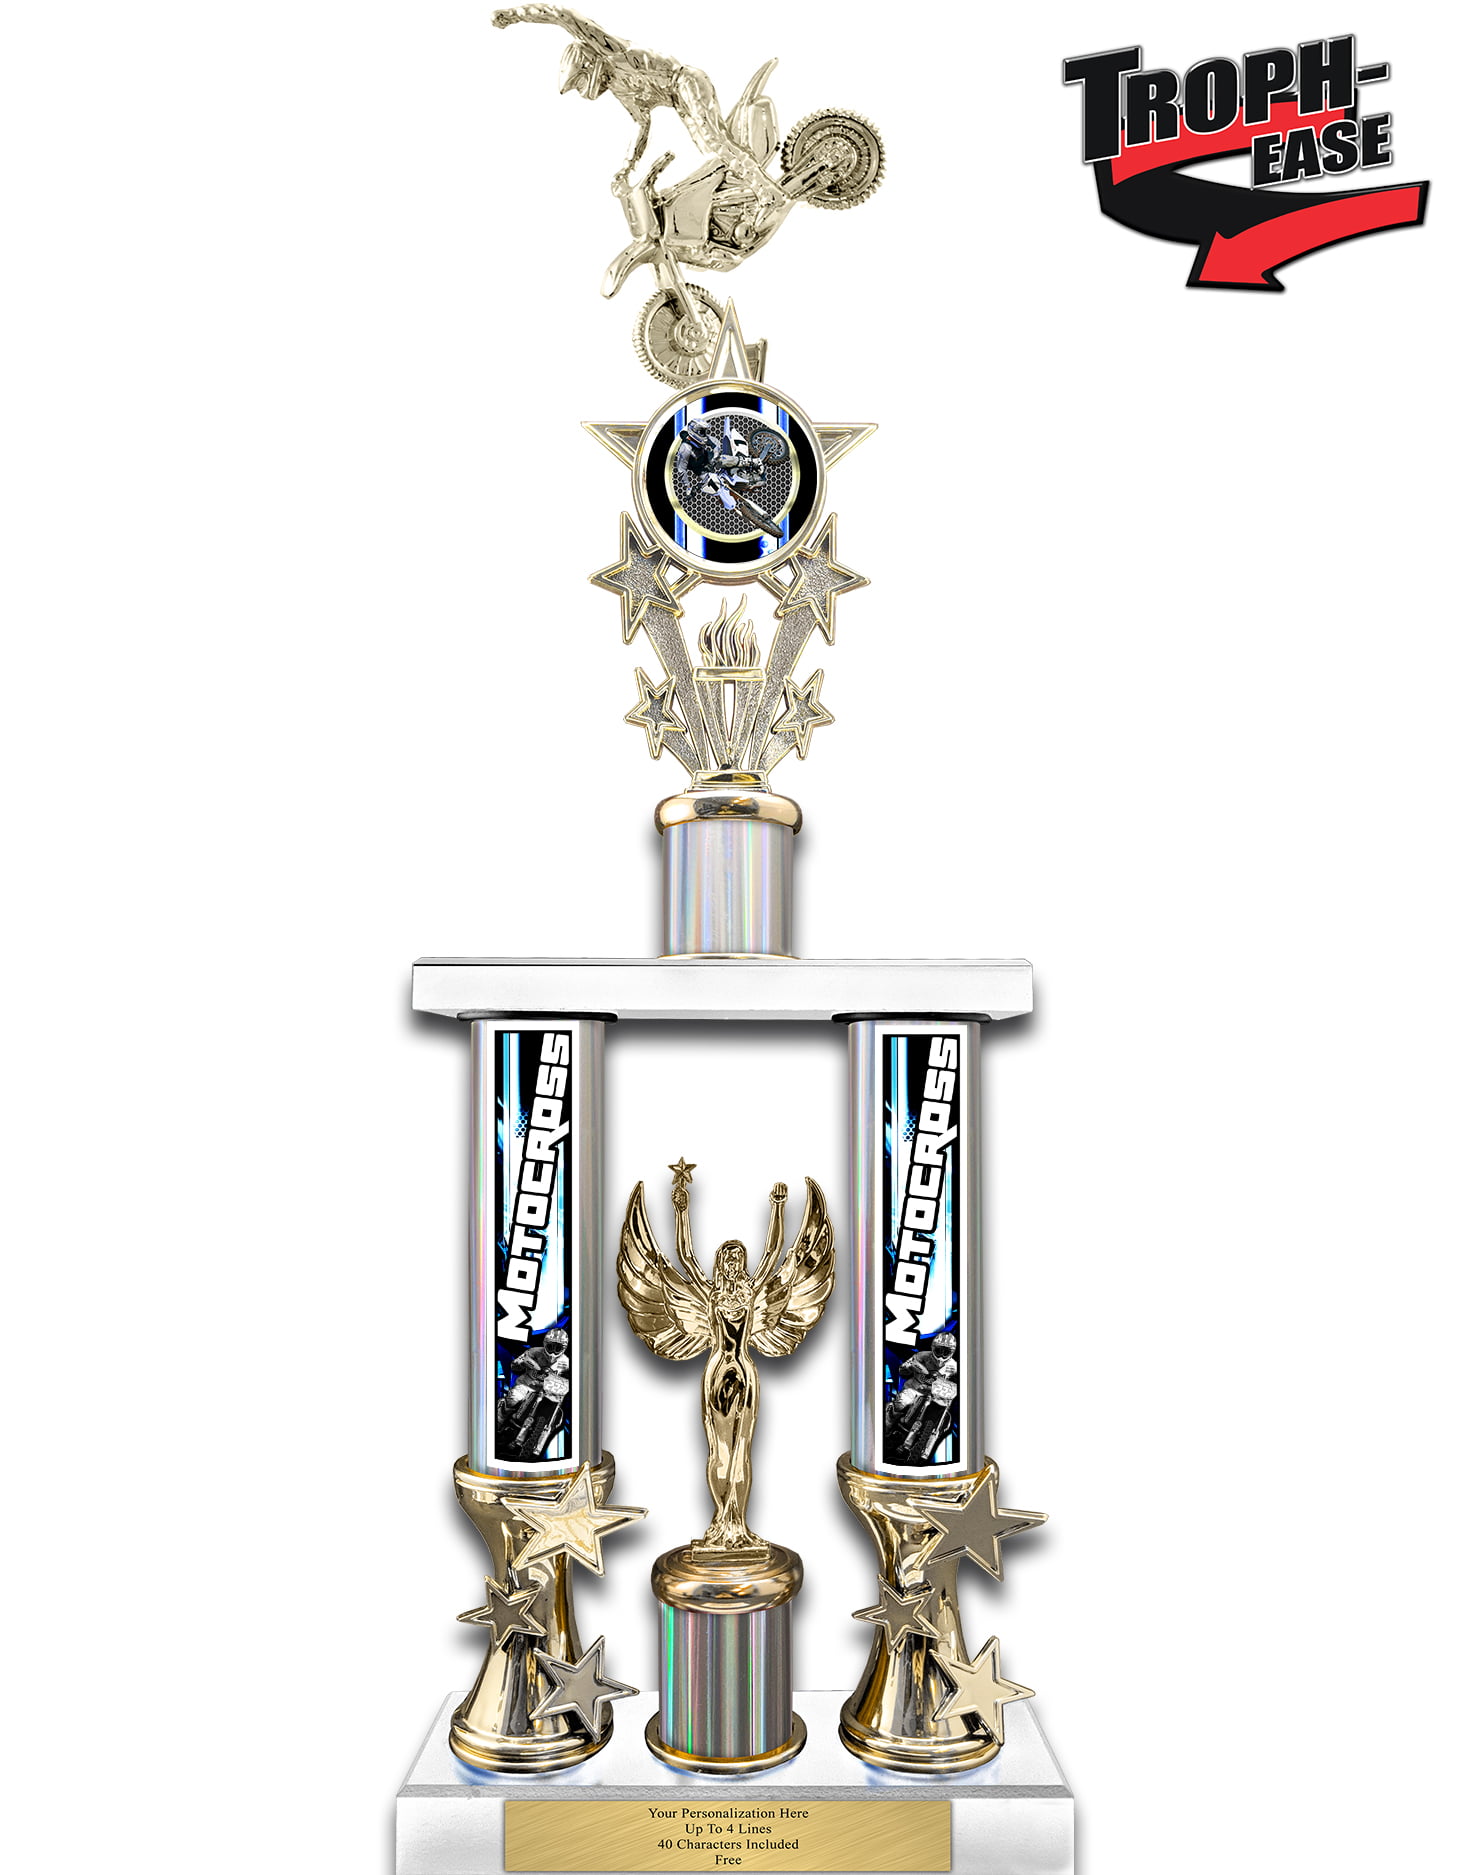 Flip Flop theme trophy 6 tall trophy with flip flop insert